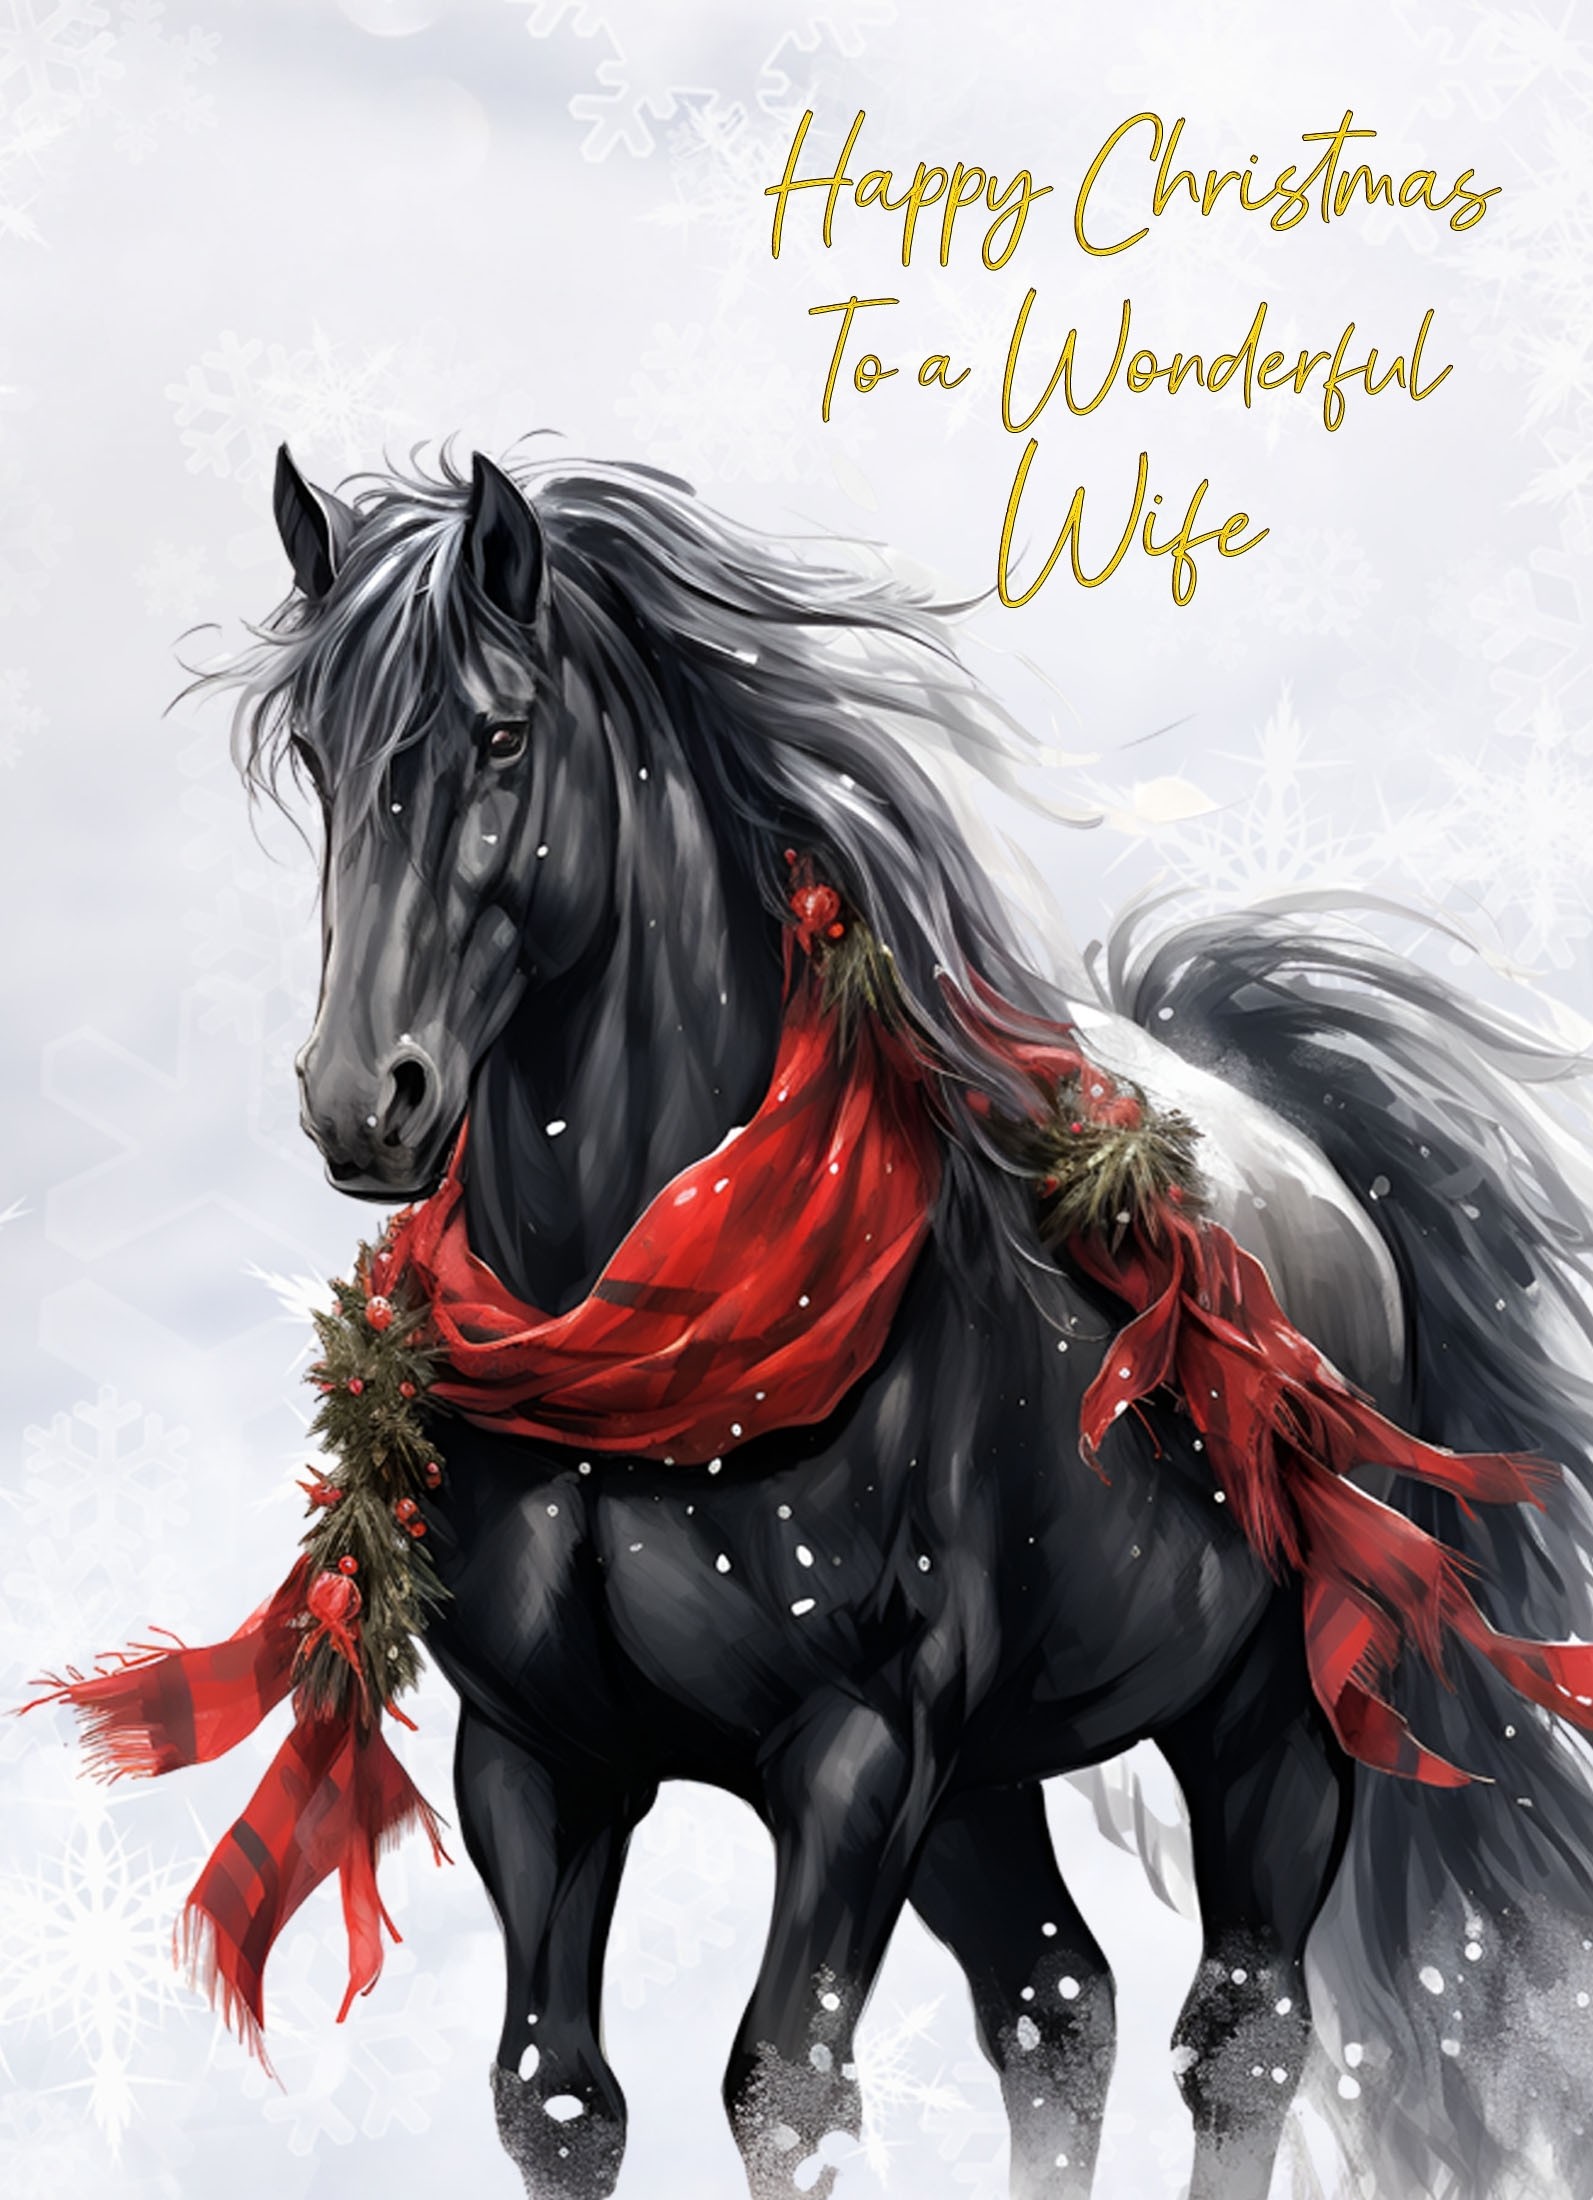 Christmas Card For Wife (Horse Art Black)